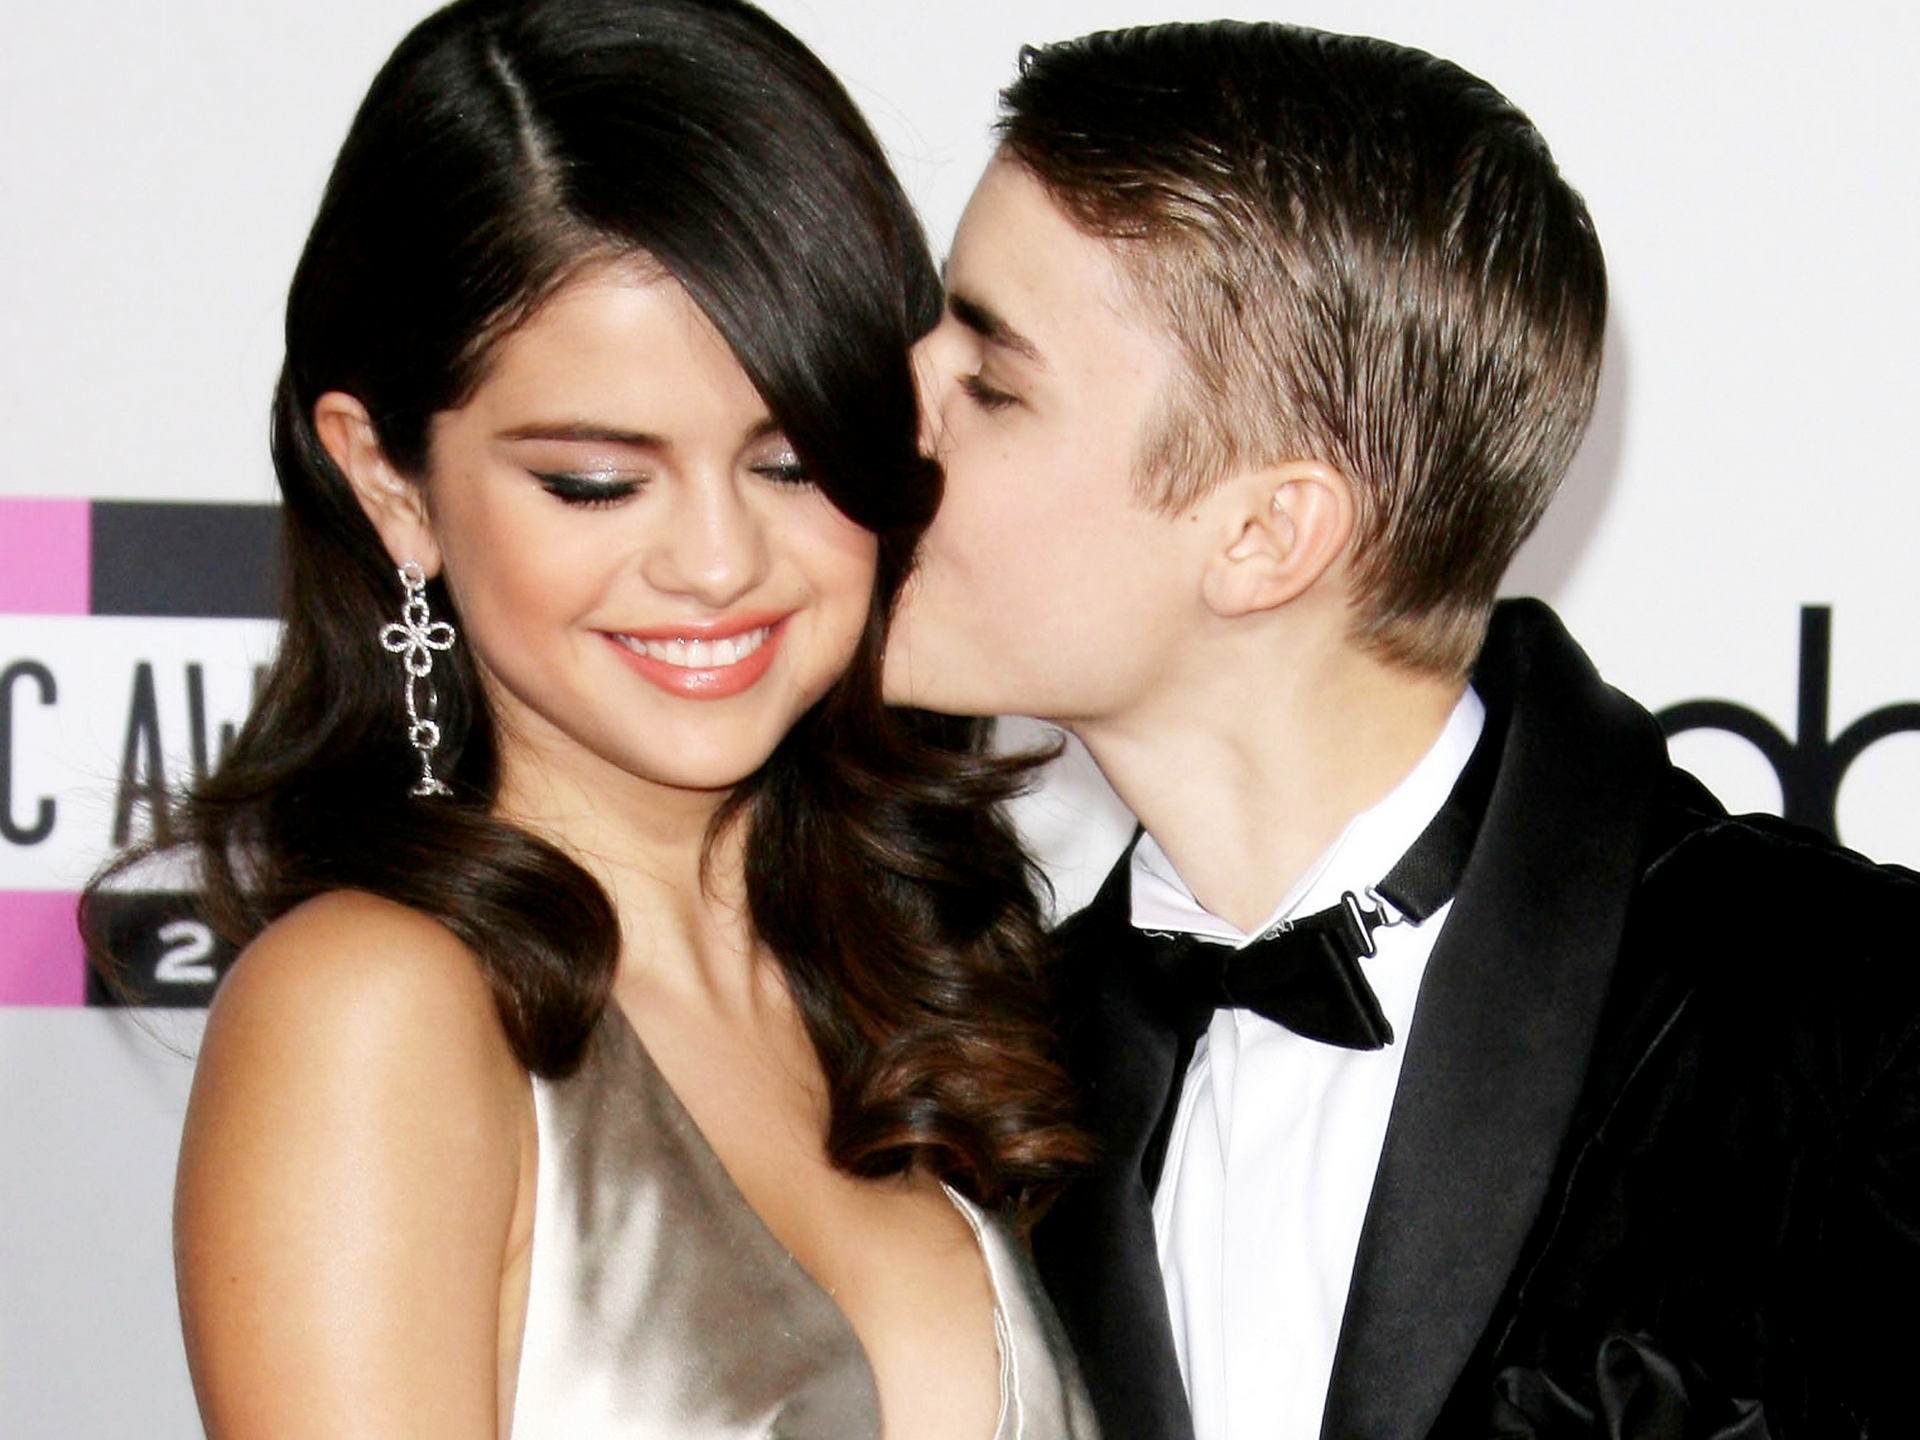 Justin Bieber And Selena Gomez Wallpaper Imagebank Biz